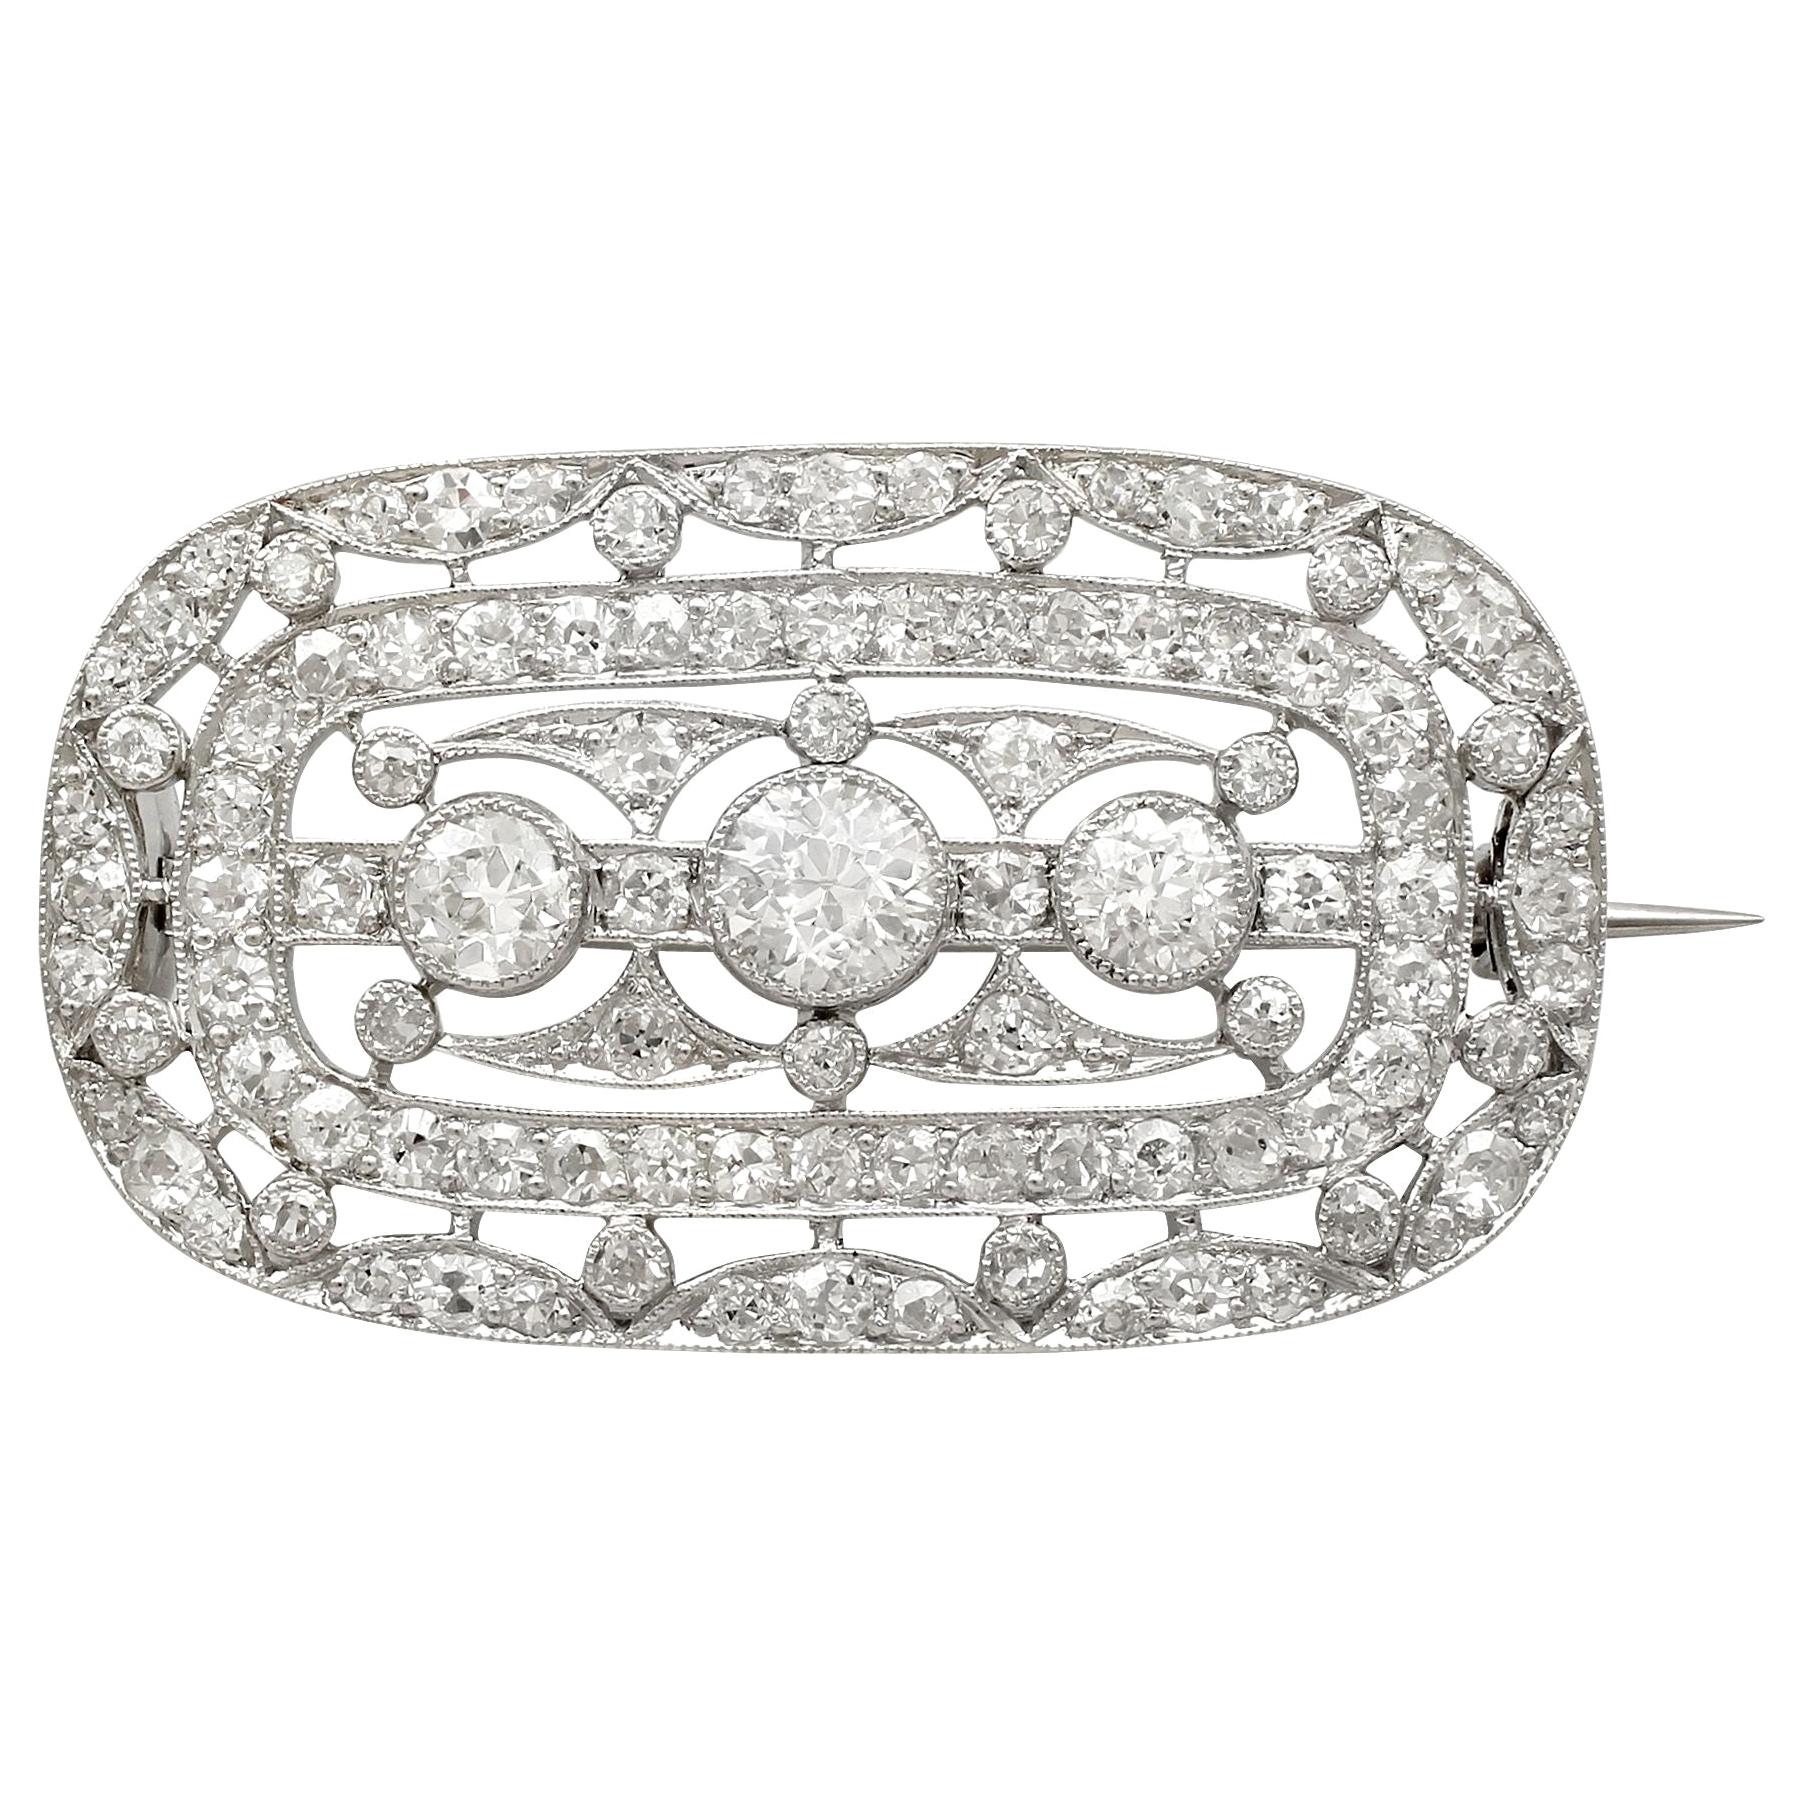 Antique 1920s 1.83 Carat Diamond and Platinum Brooch by Garrard